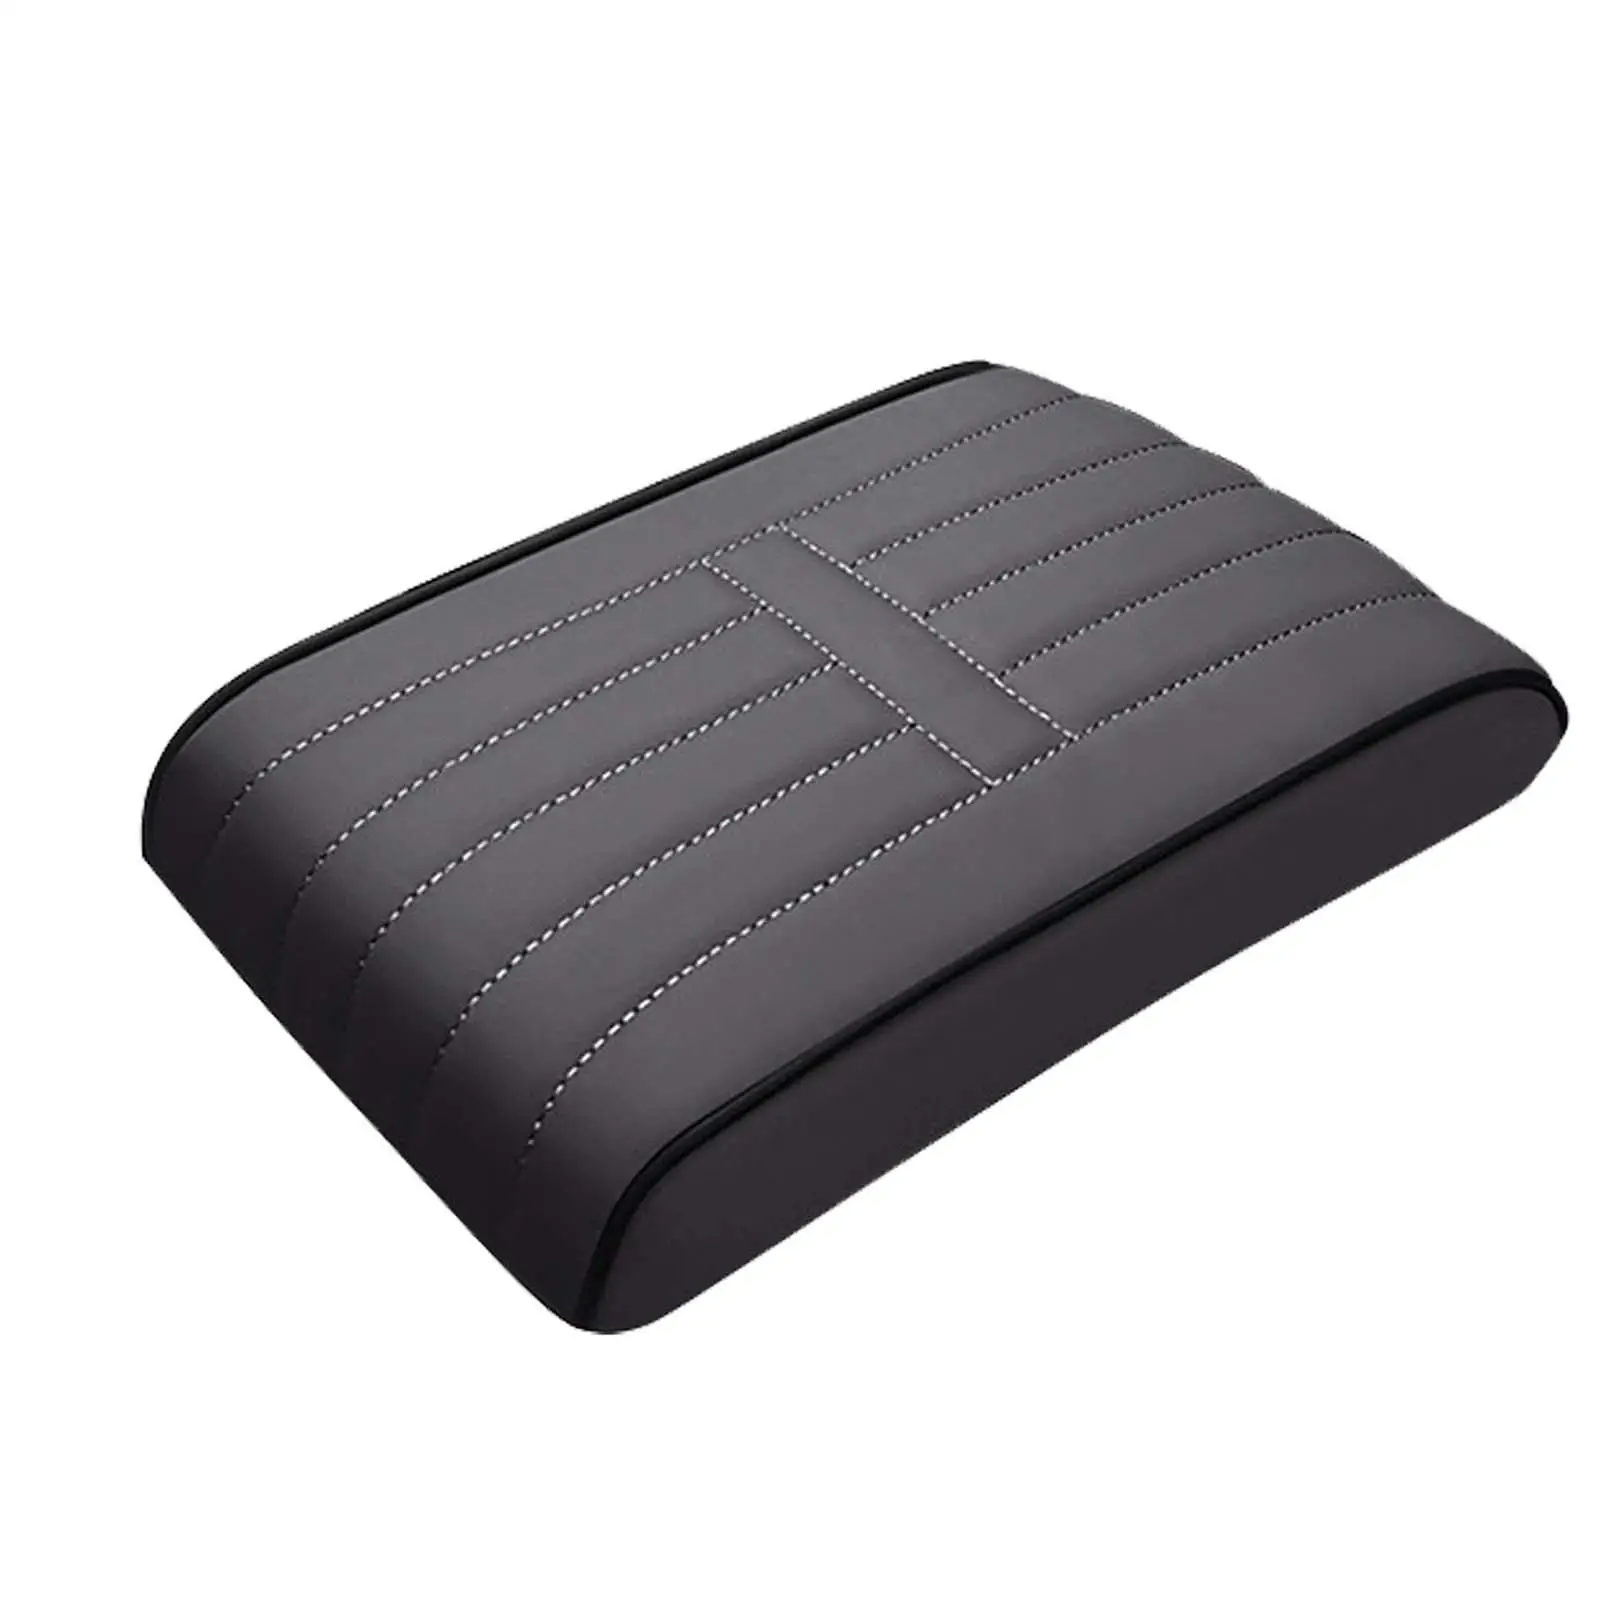 Arm Rest Cushion Pad Car Center Console Box Cushion Pad for Vehicle SUV